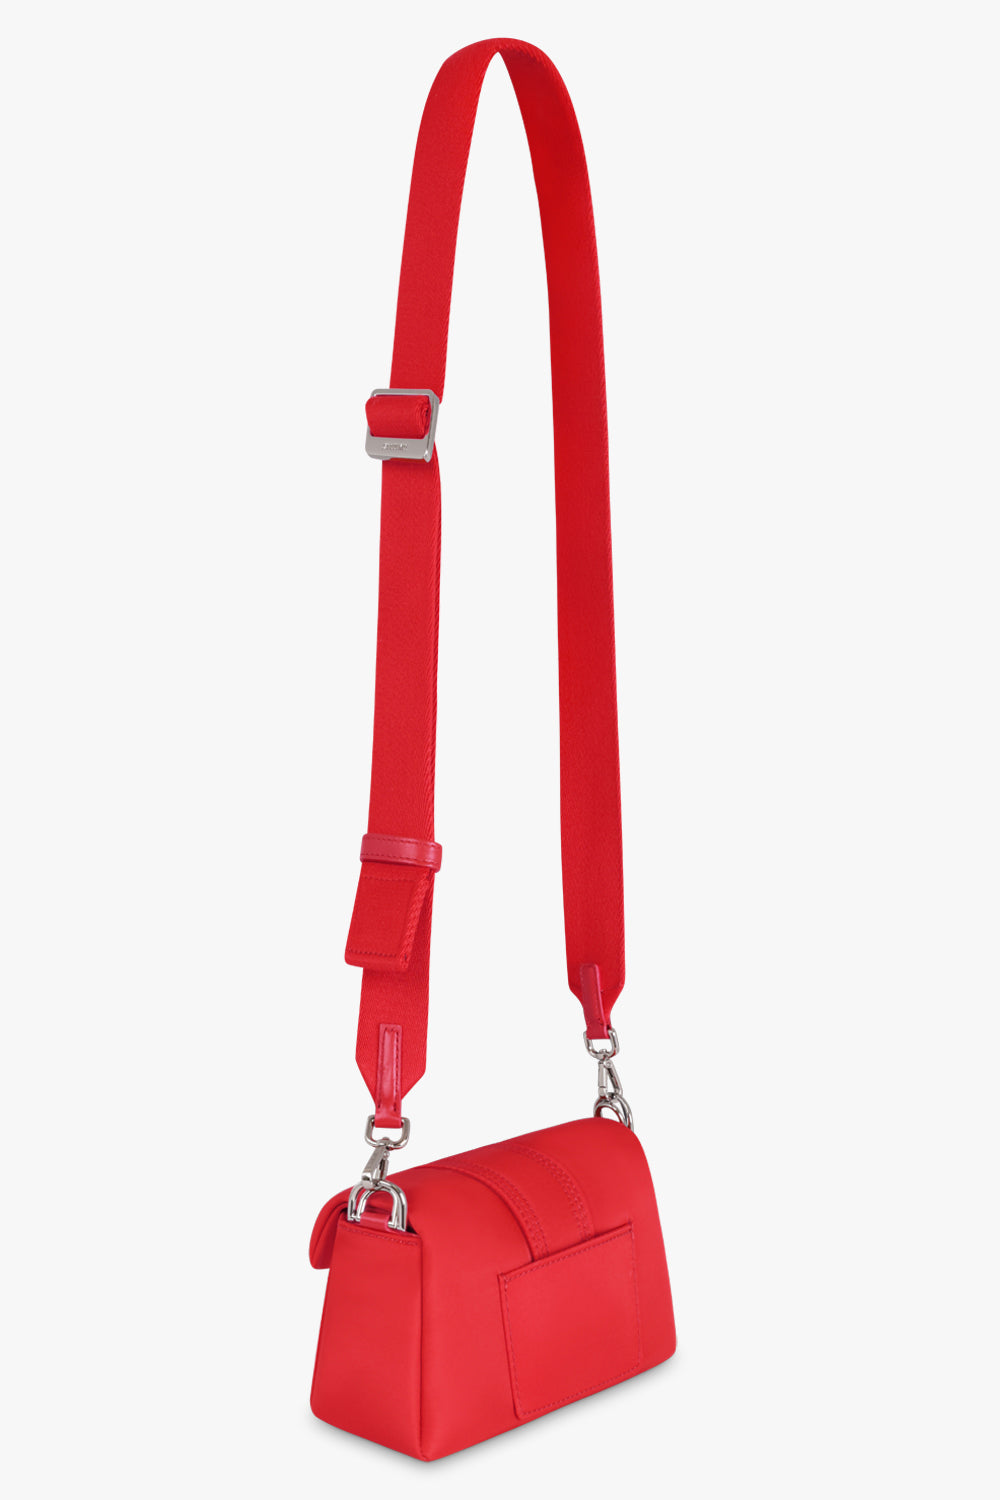 JACQUEMUS BAGS Red Le Petit Bambimou Nylon | Red